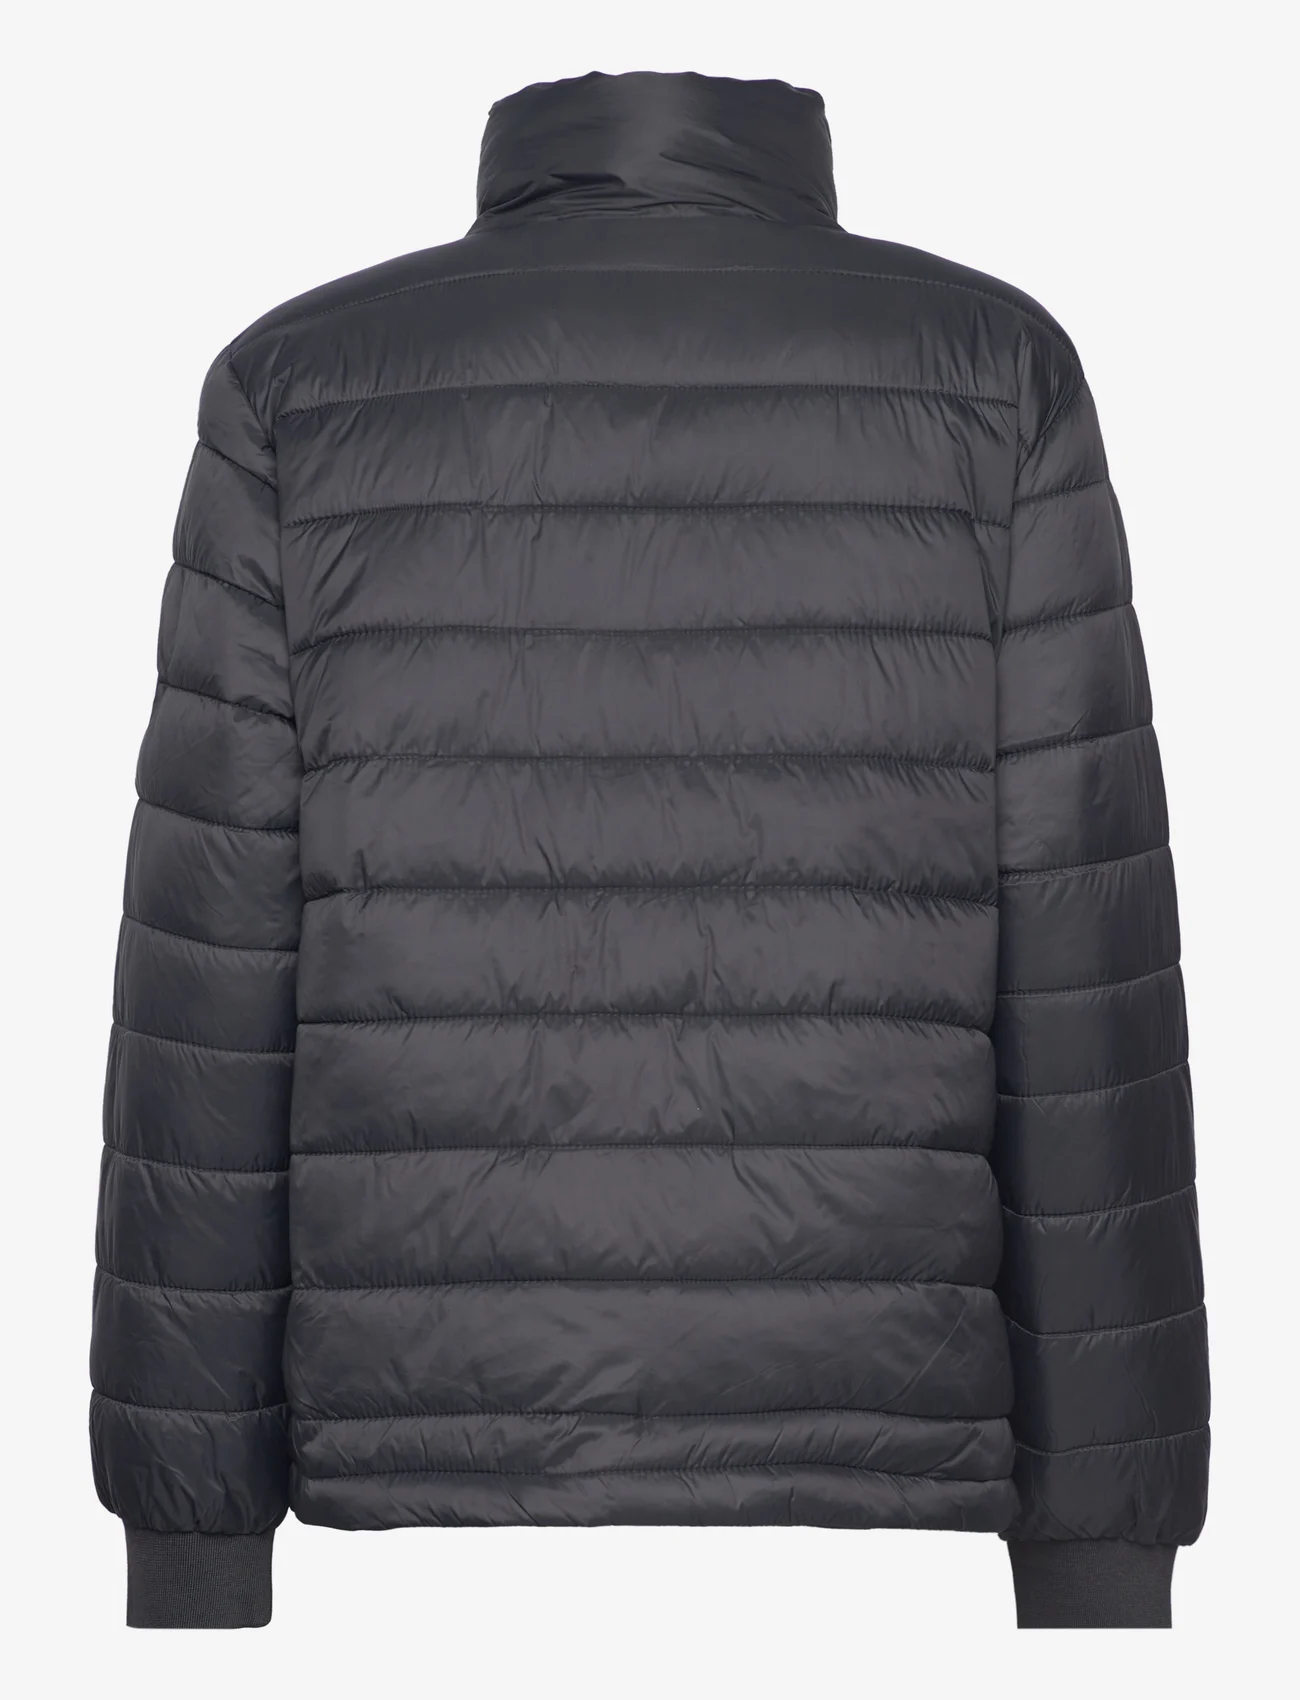 Kaffe - KAlira Jacket - winter jackets - black deep - 1